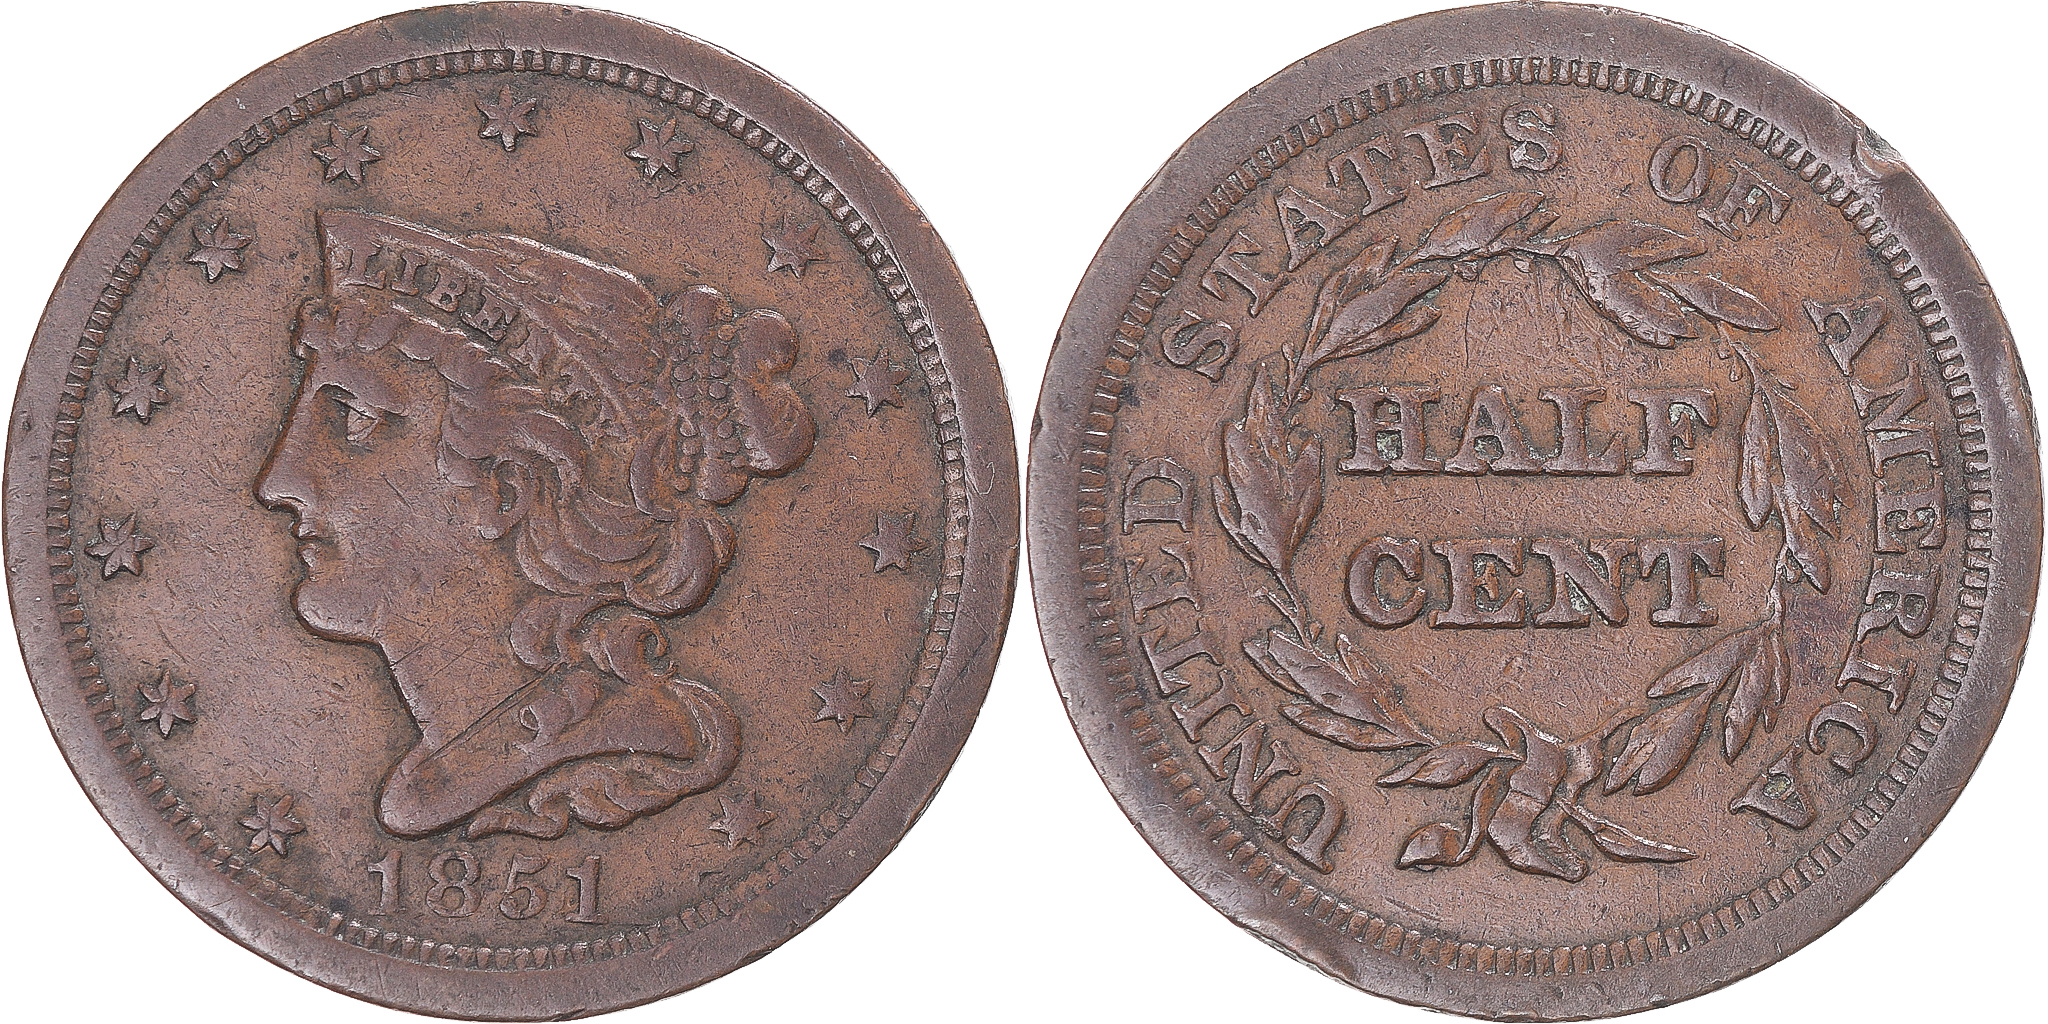 343401] Coin, United States, Braided Hair Half Cent, Half Cent